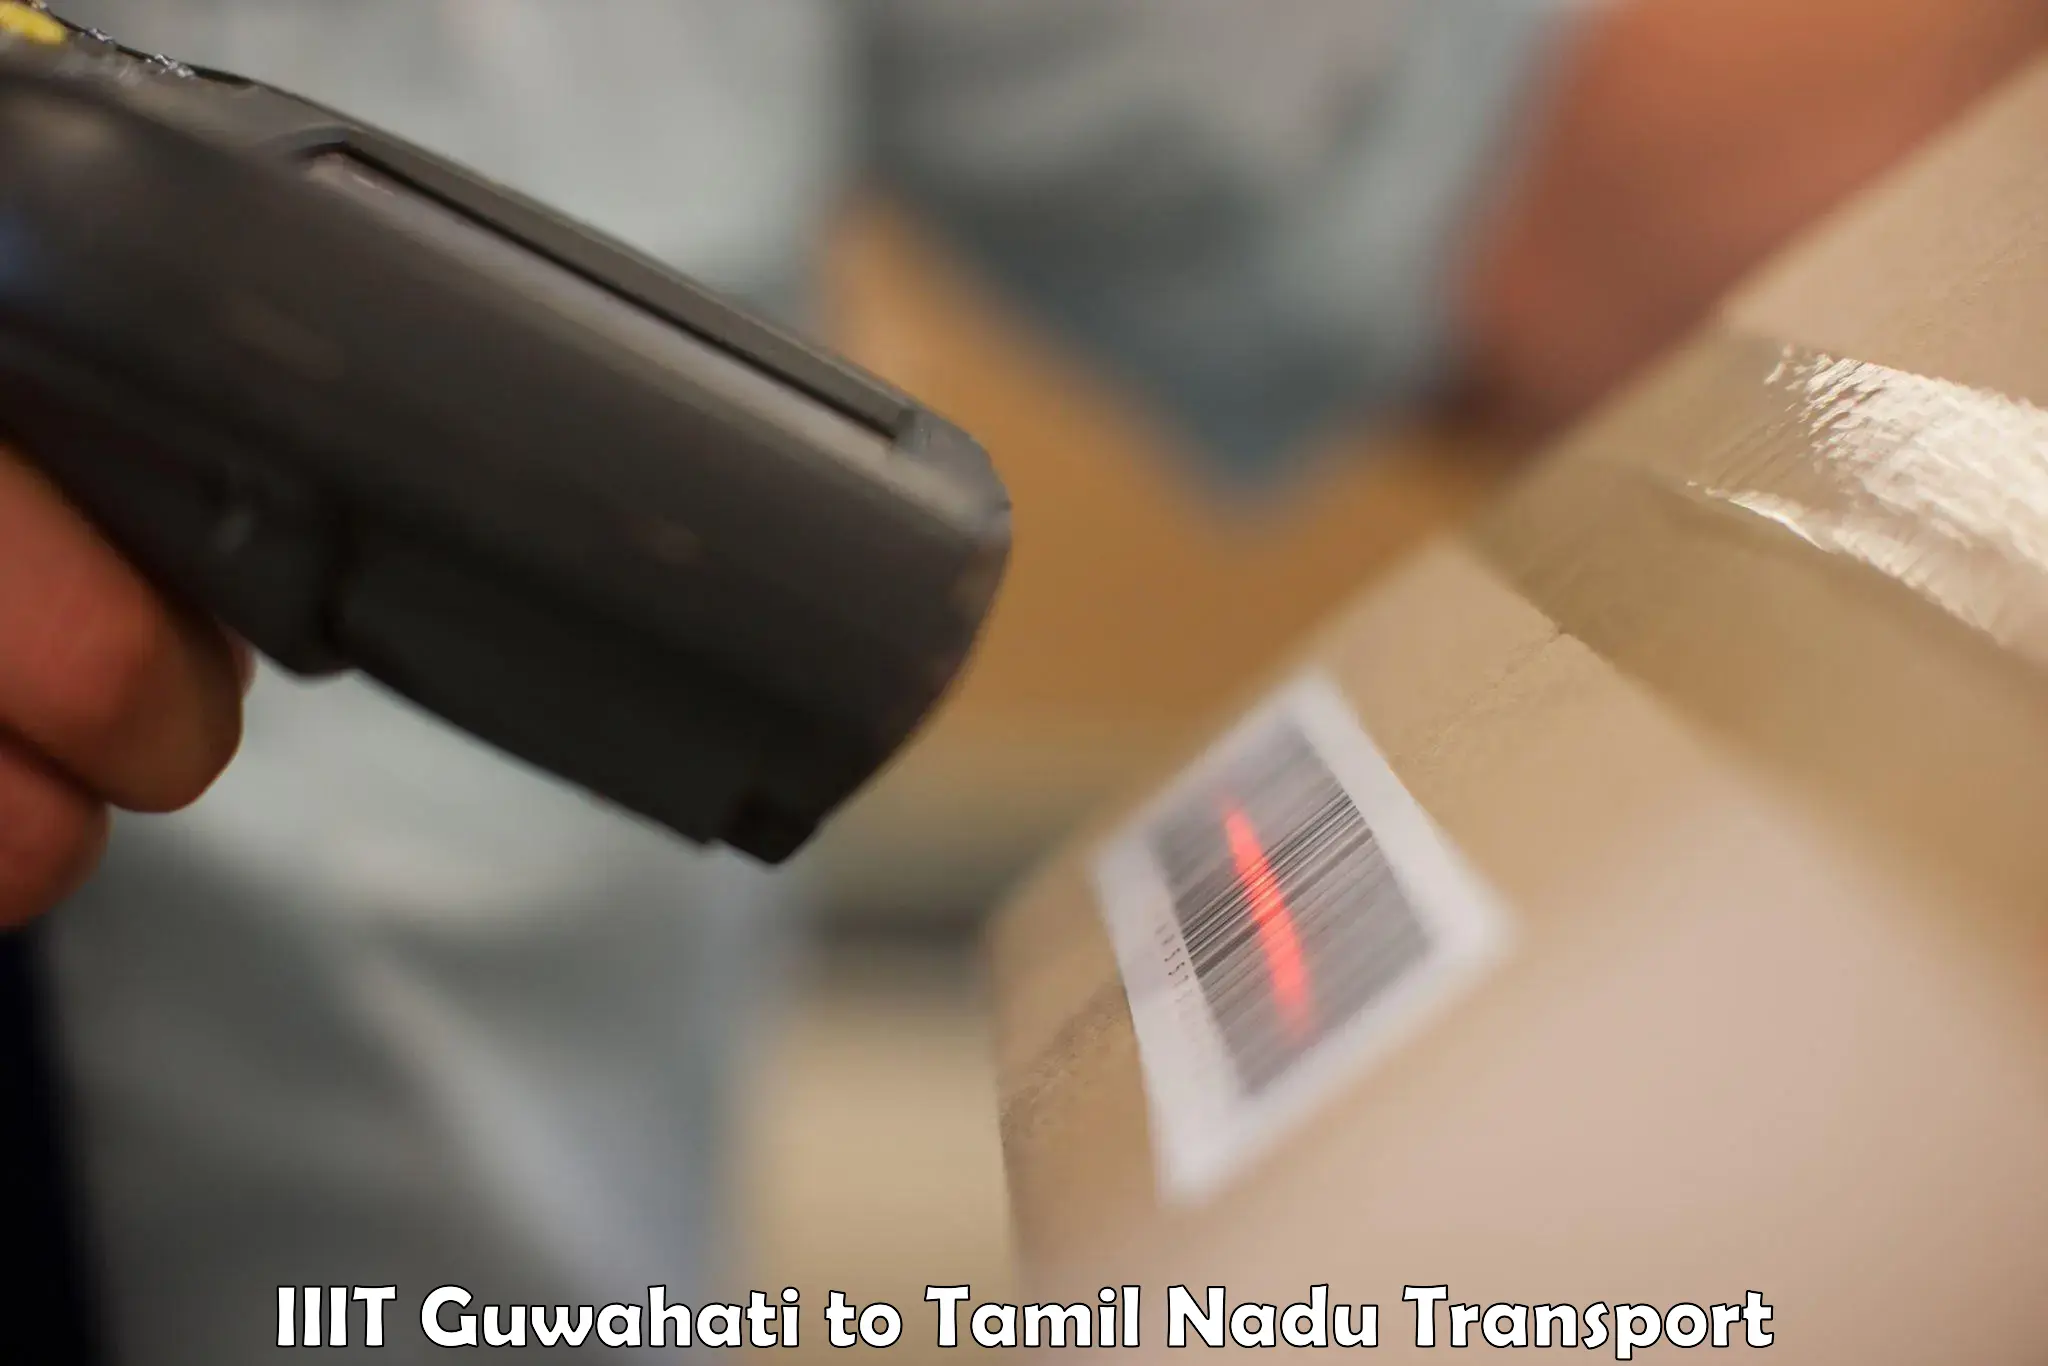 Pick up transport service IIIT Guwahati to Thiruvadanai